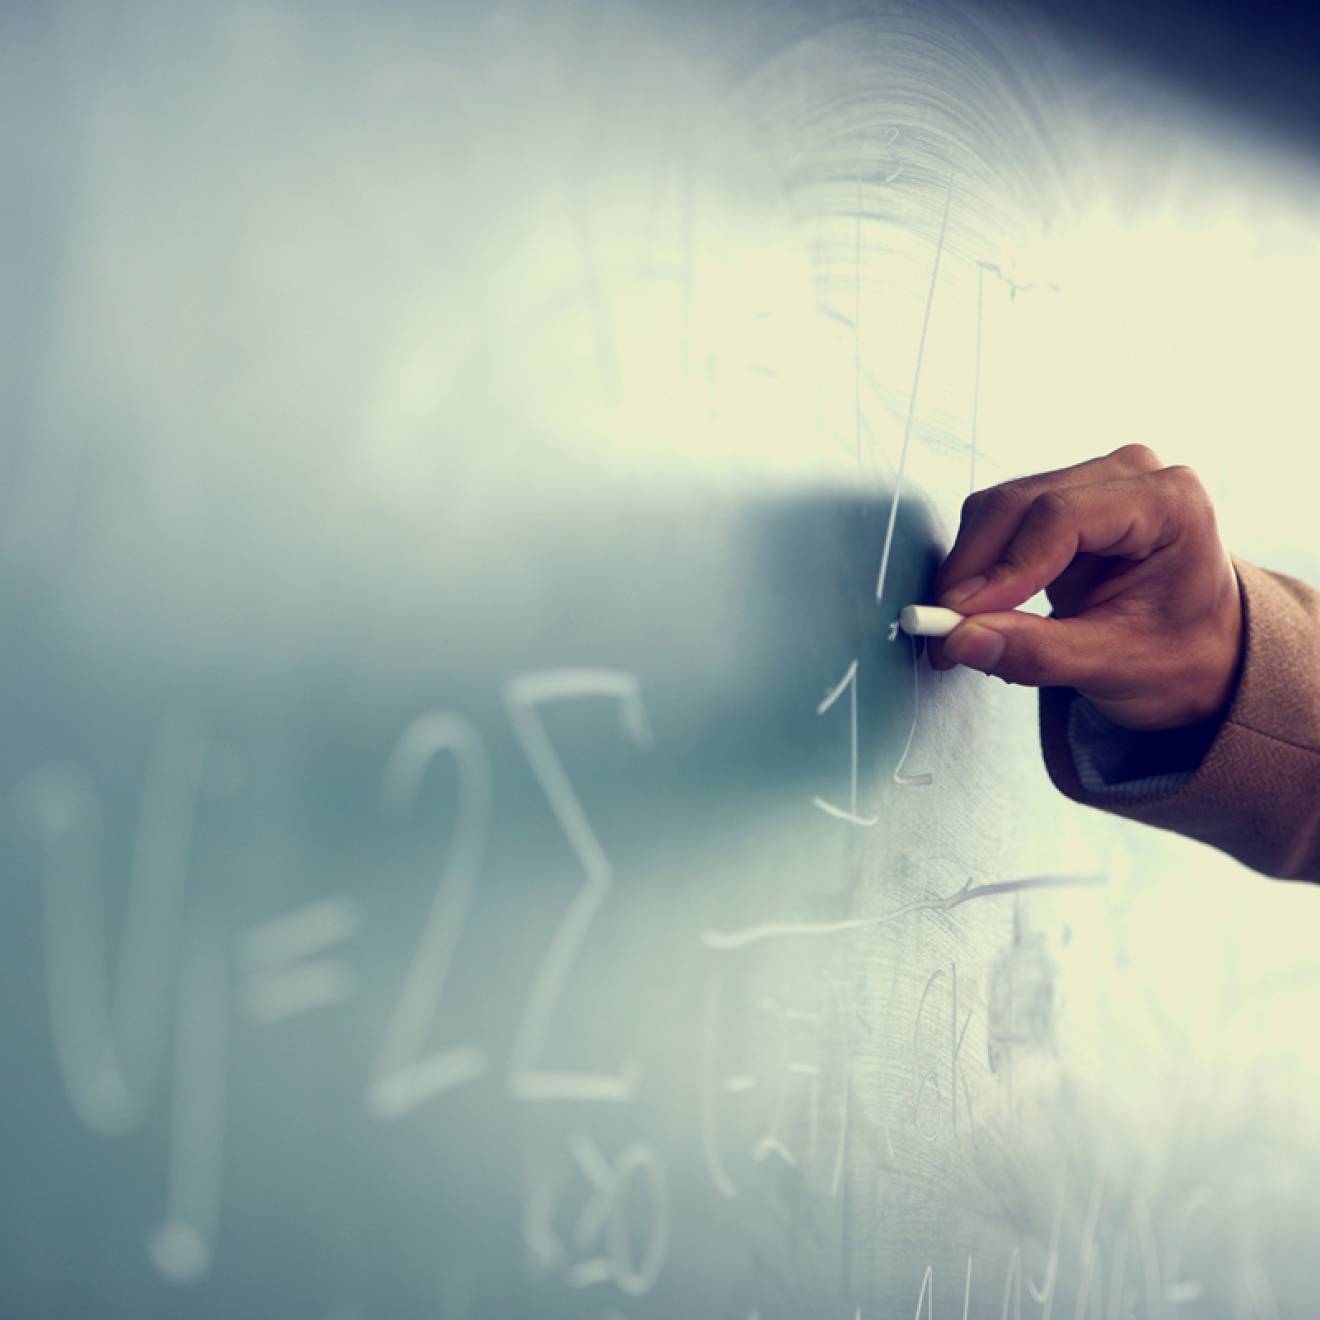 A Black teacher writing on a chalkboard